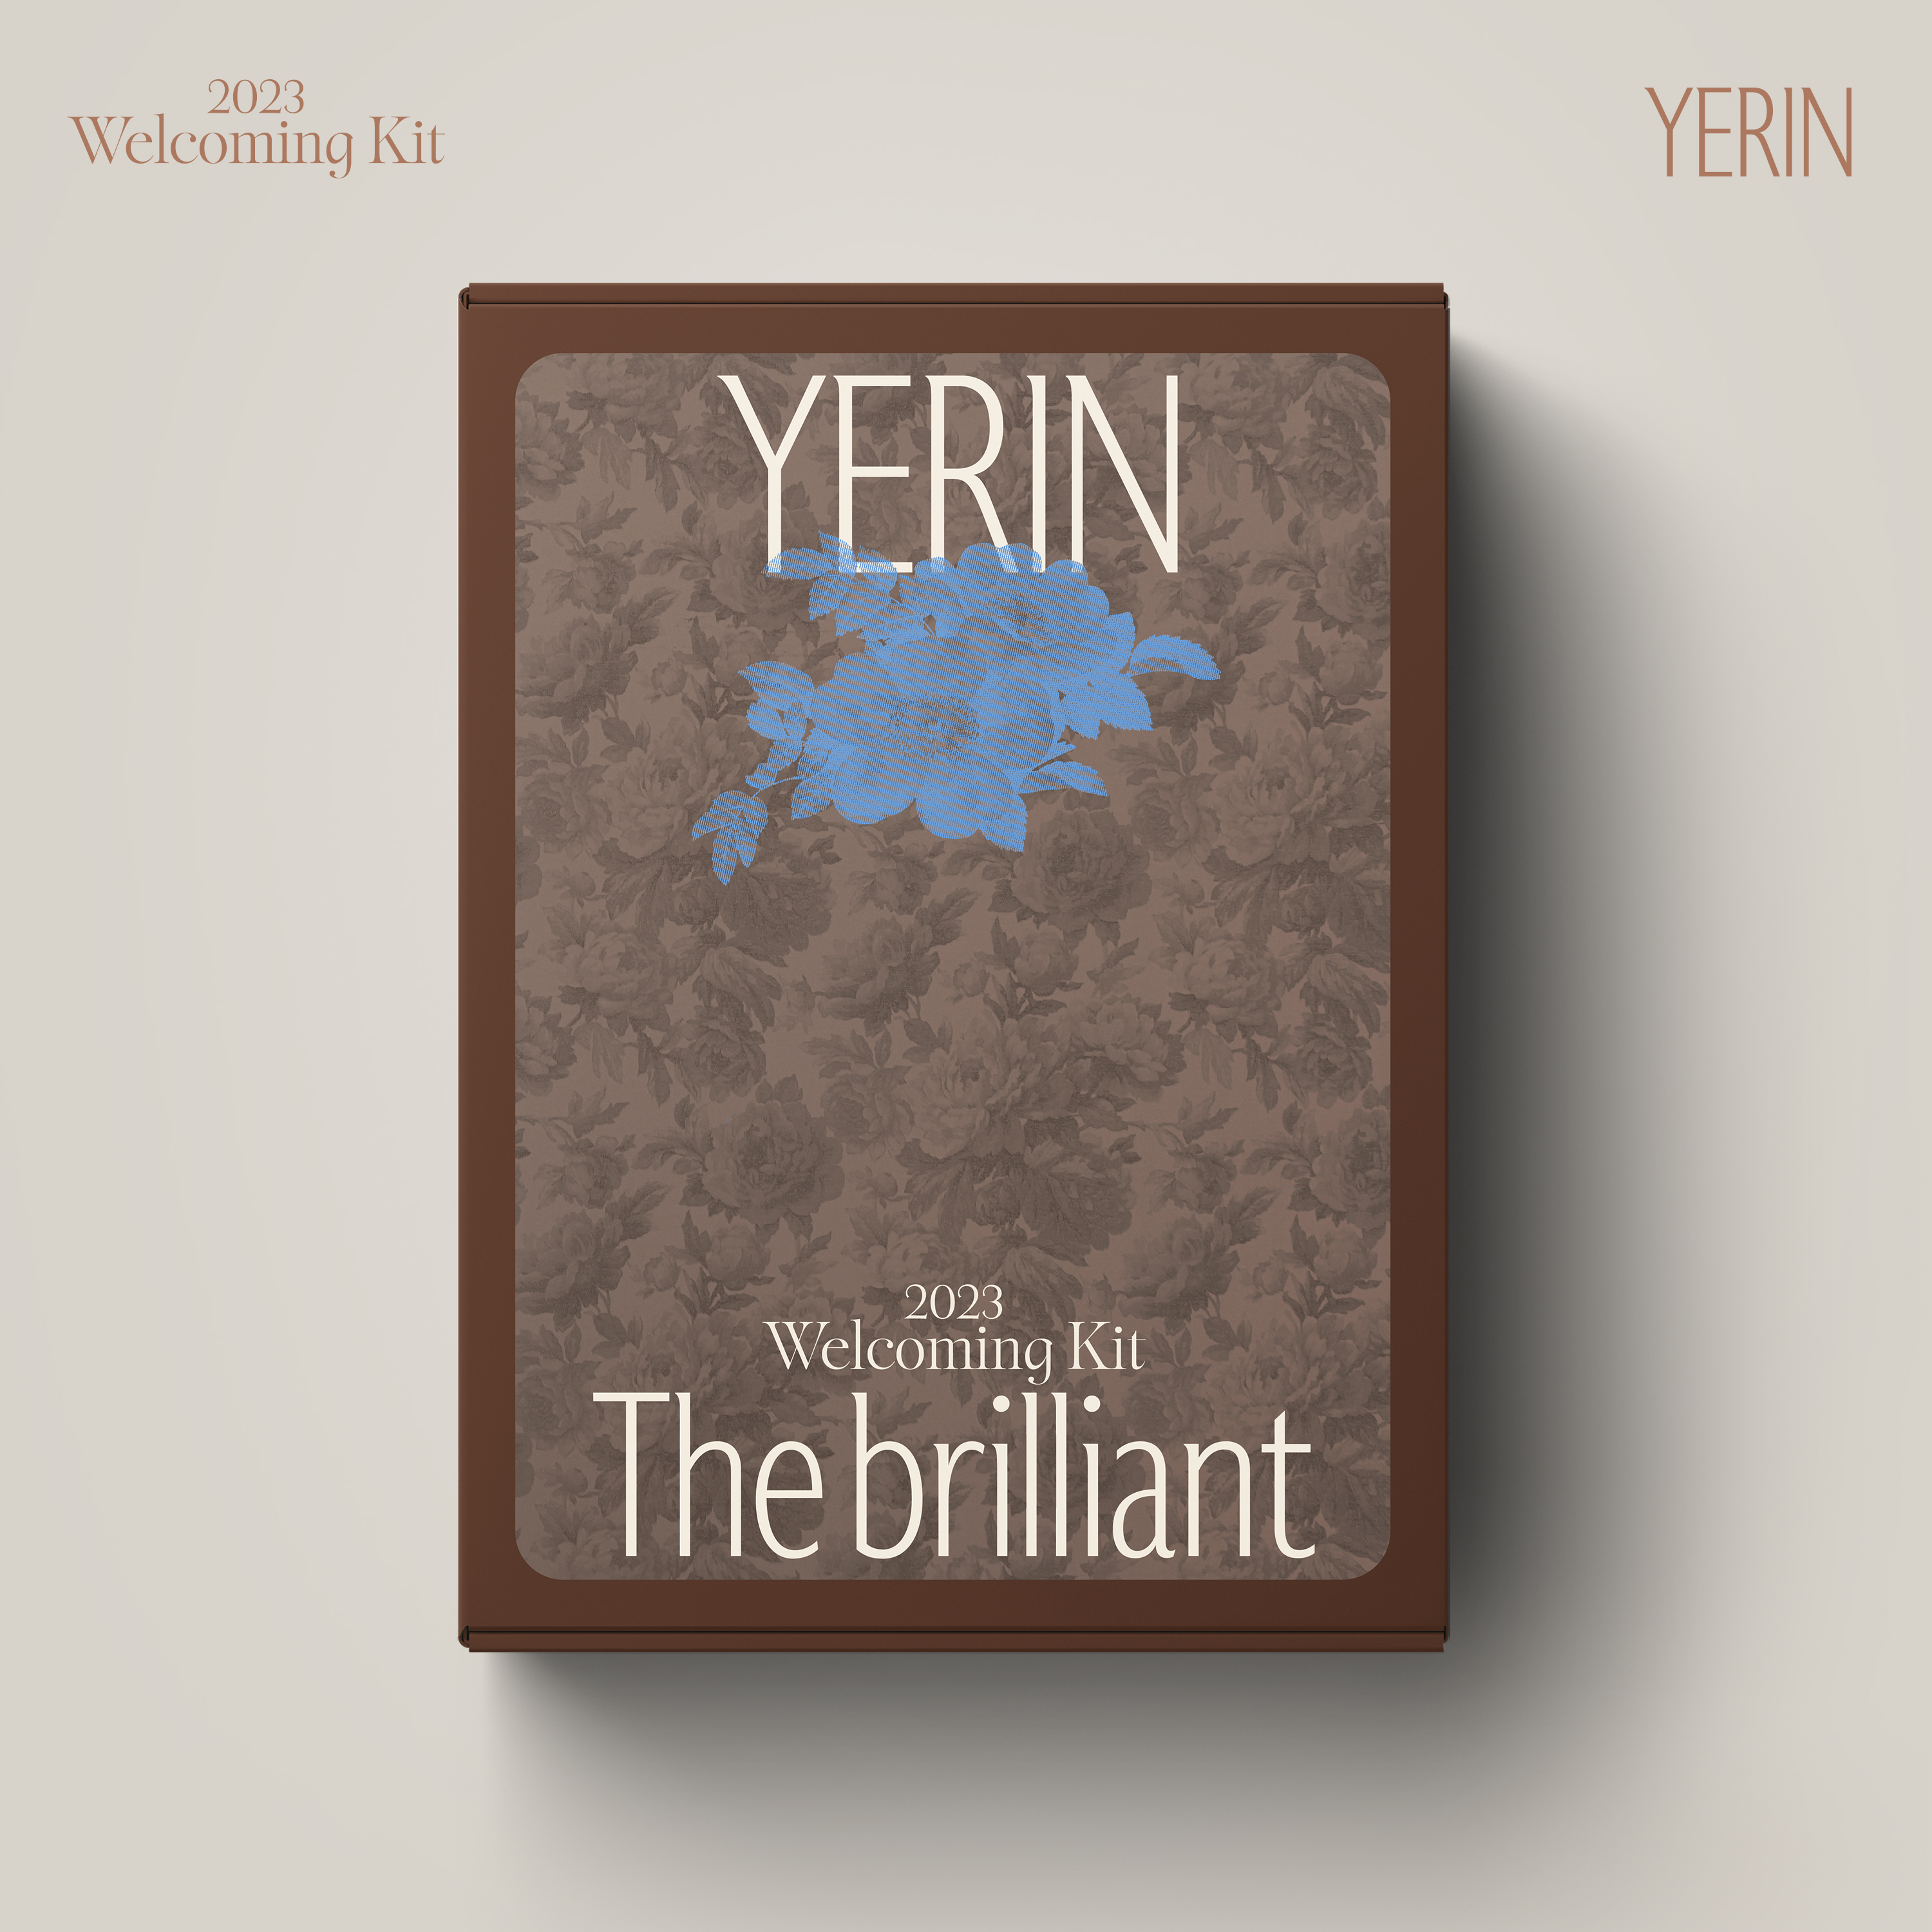 YERIN - 2023 WELCOMING KIT [The brilliant]